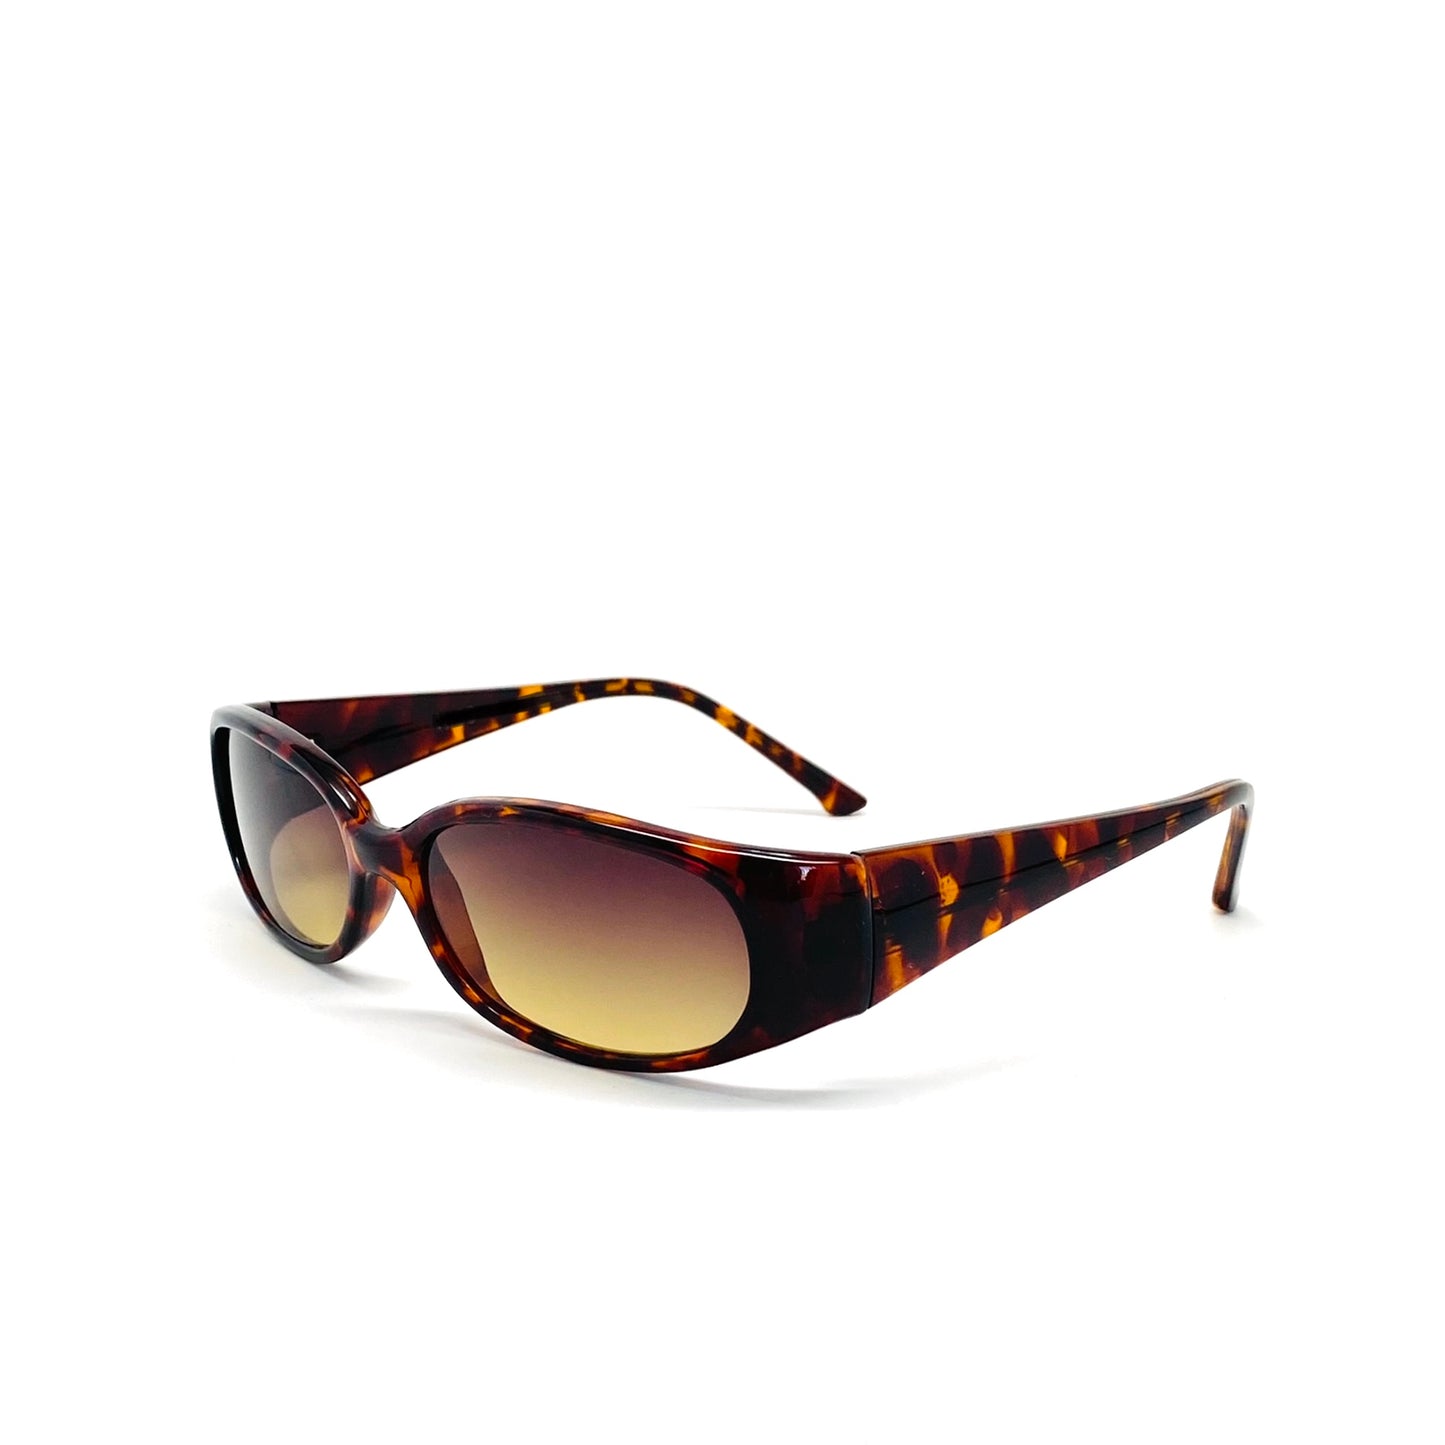 Vintage Small Size Alexine Oval Frame Sunglasses - Orange